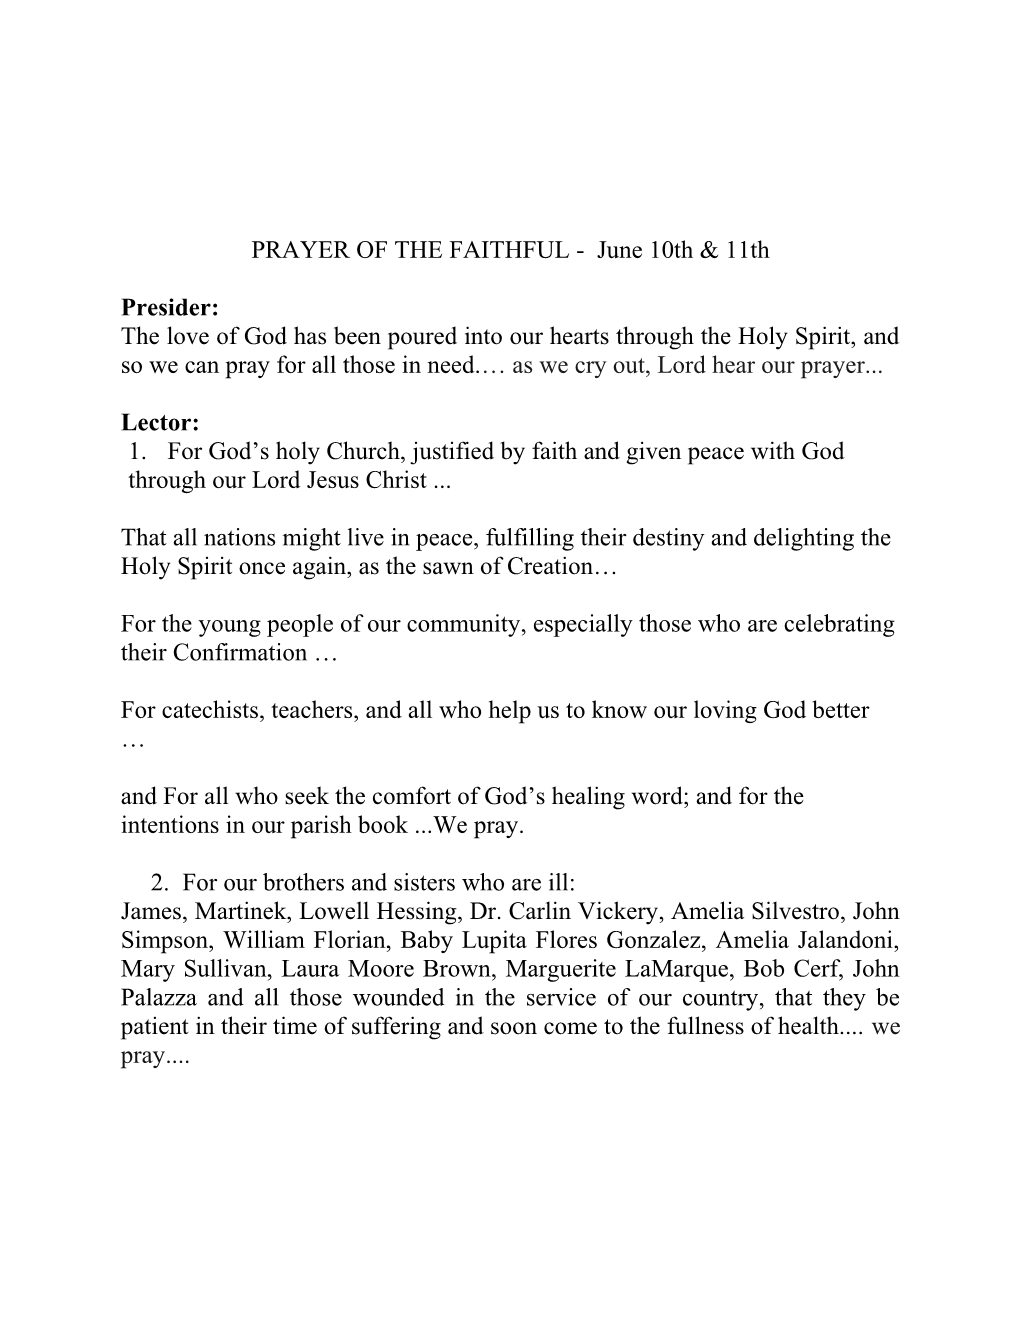 PRAYER of the FAITHFUL - June 10Th11th